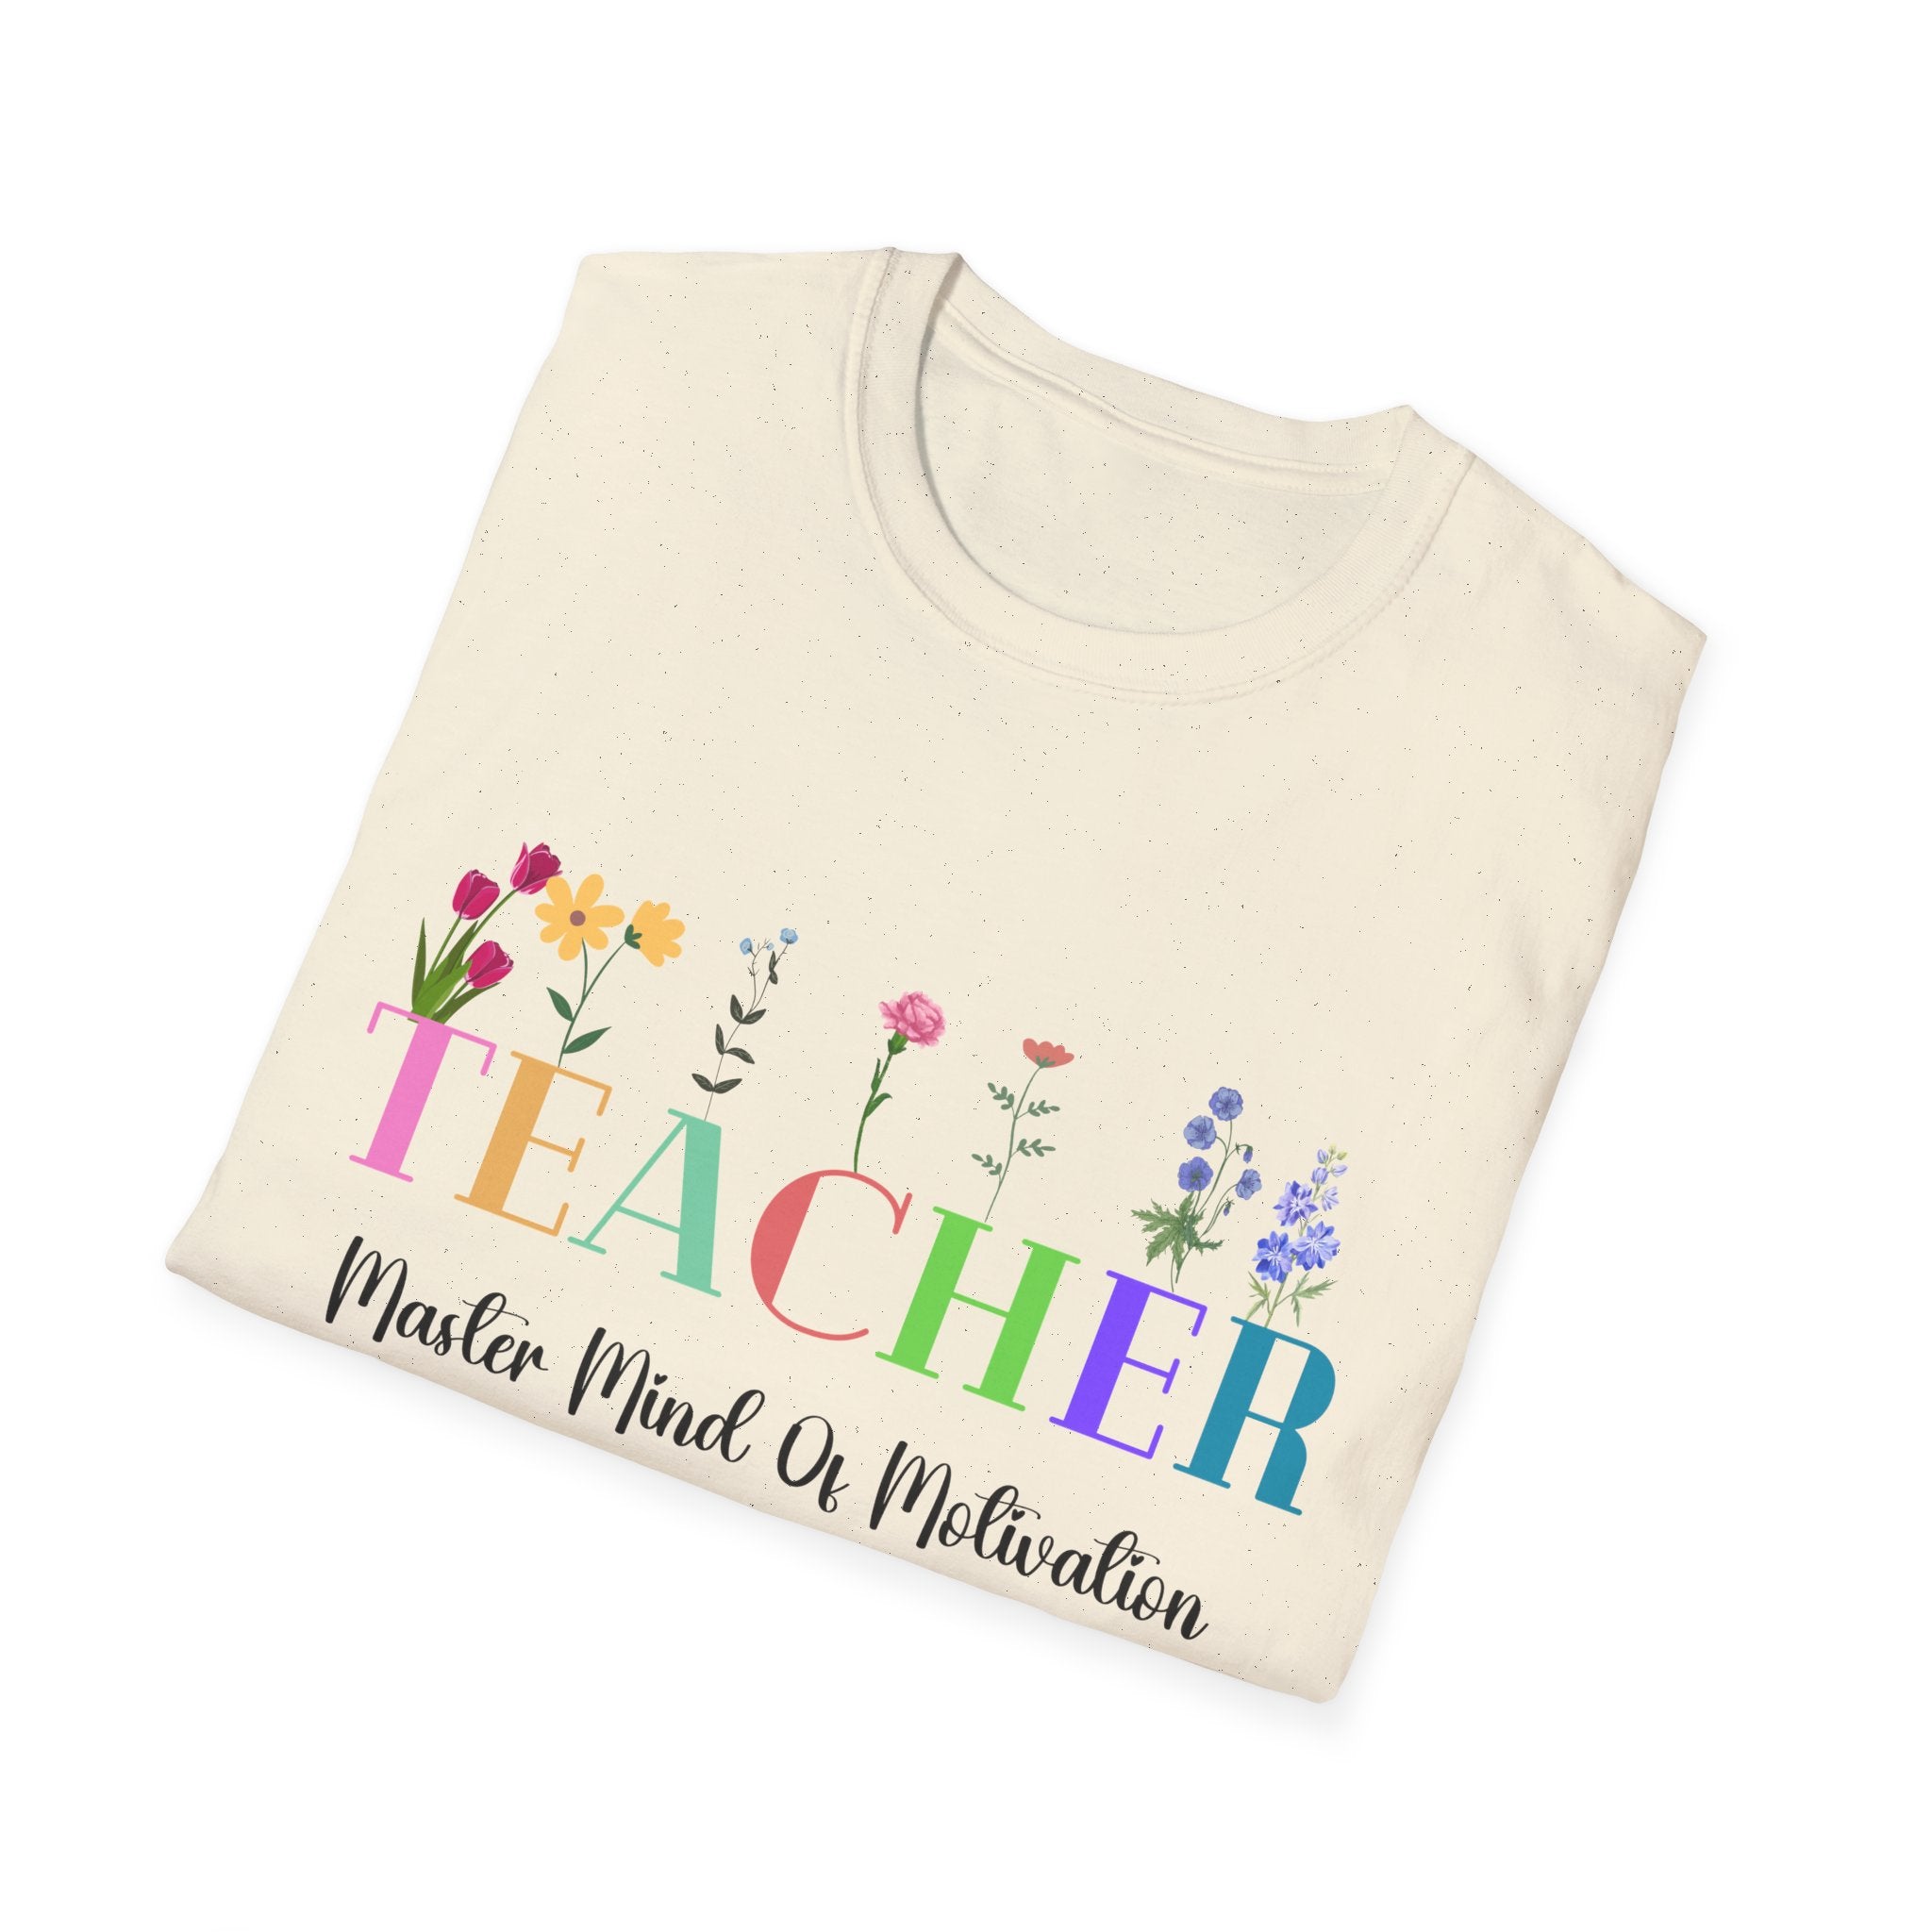 Teacher Master Mind of Motivation Unisex Softstyle T-Shirt